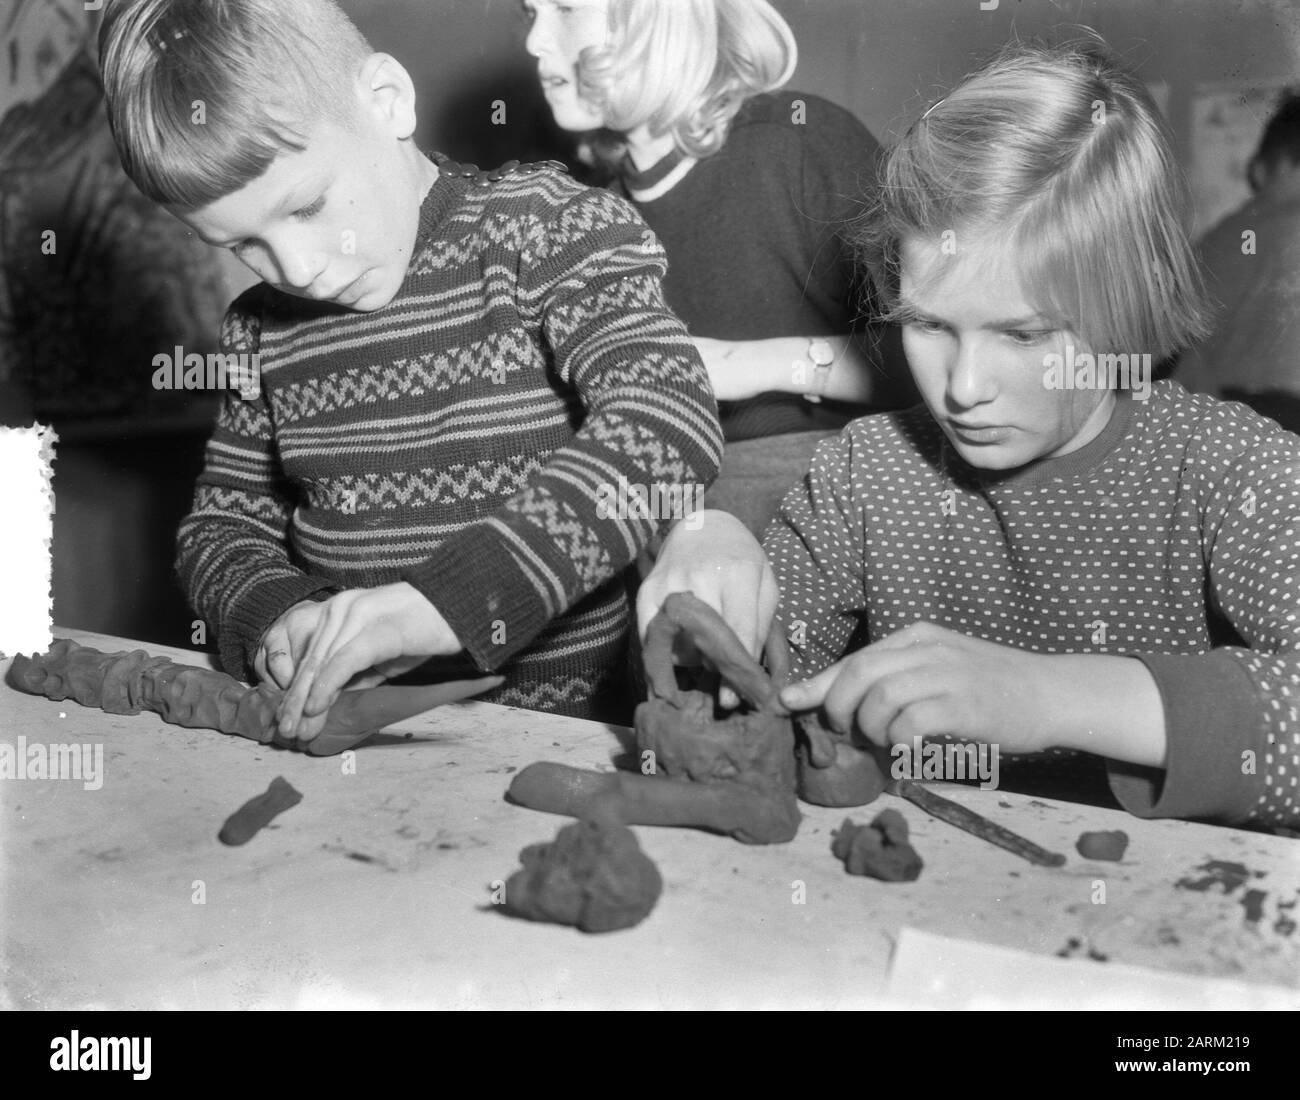 Platz junger Künstler im Stedelijk Museum Amsterdam Datum: 30. Dezember 1953 Ort: Amsterdam, Noord-Holland Schlüsselwörter: Museen, Kinder, Ton Stockfoto